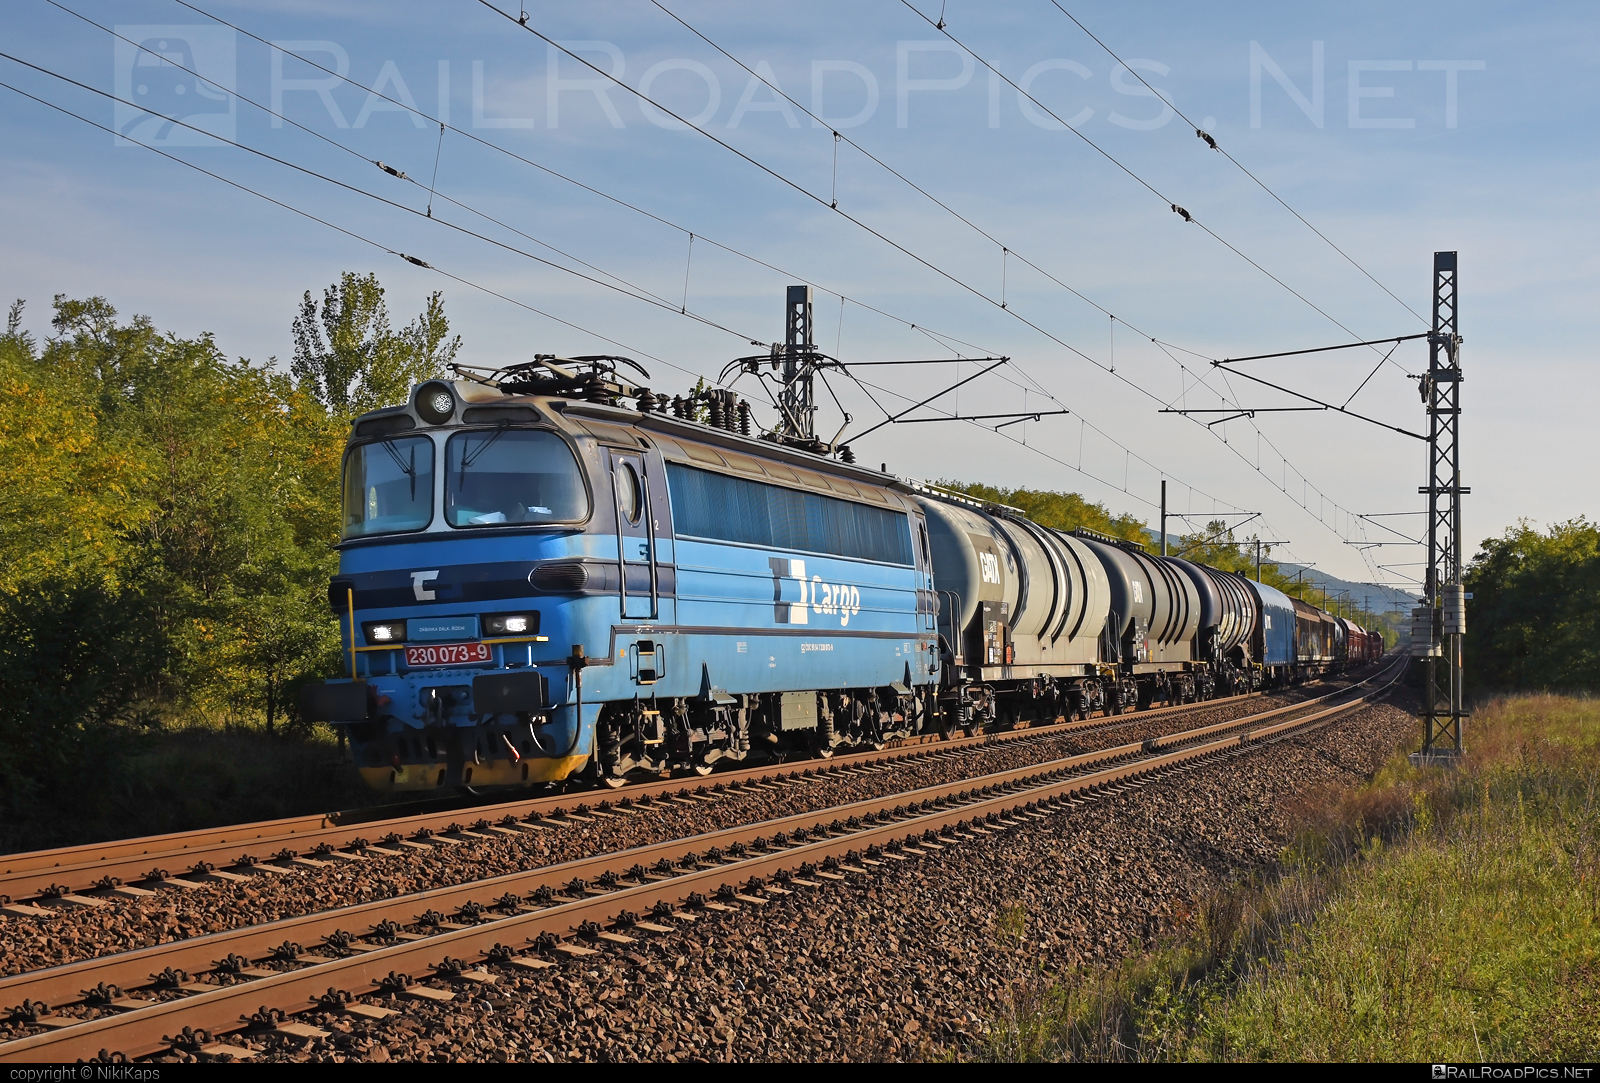 Škoda 47E - 230 073-9 operated by ČD Cargo, a.s. #cdcargo #laminatka #locomotive240 #mixofcargo #skoda #skoda47e